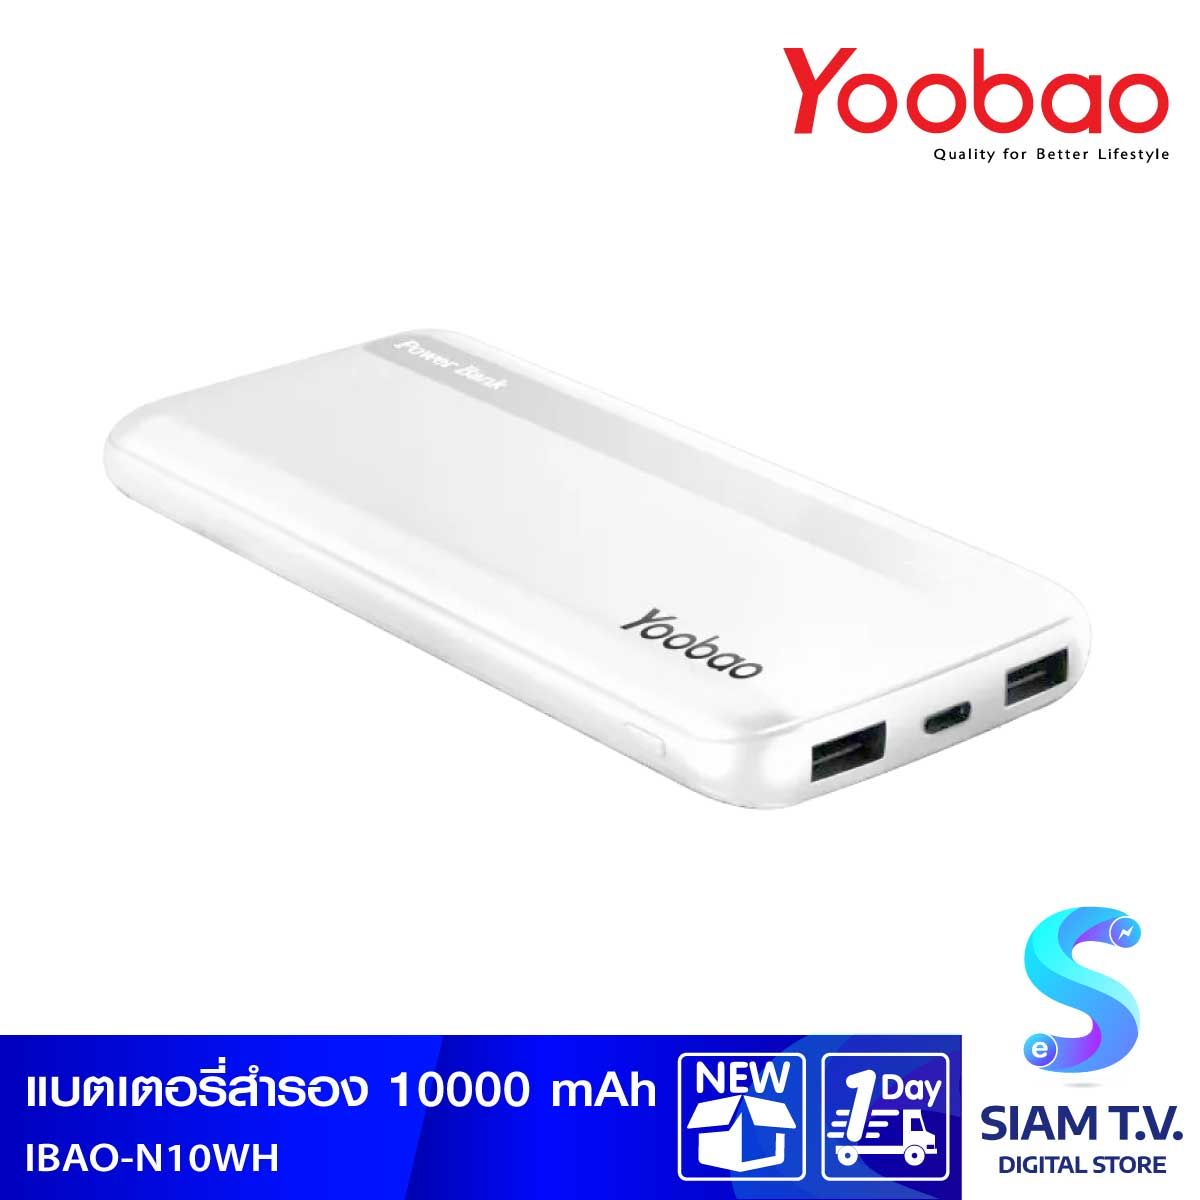 Yoobao Powerbank 10,000 mAh N10-V2 White